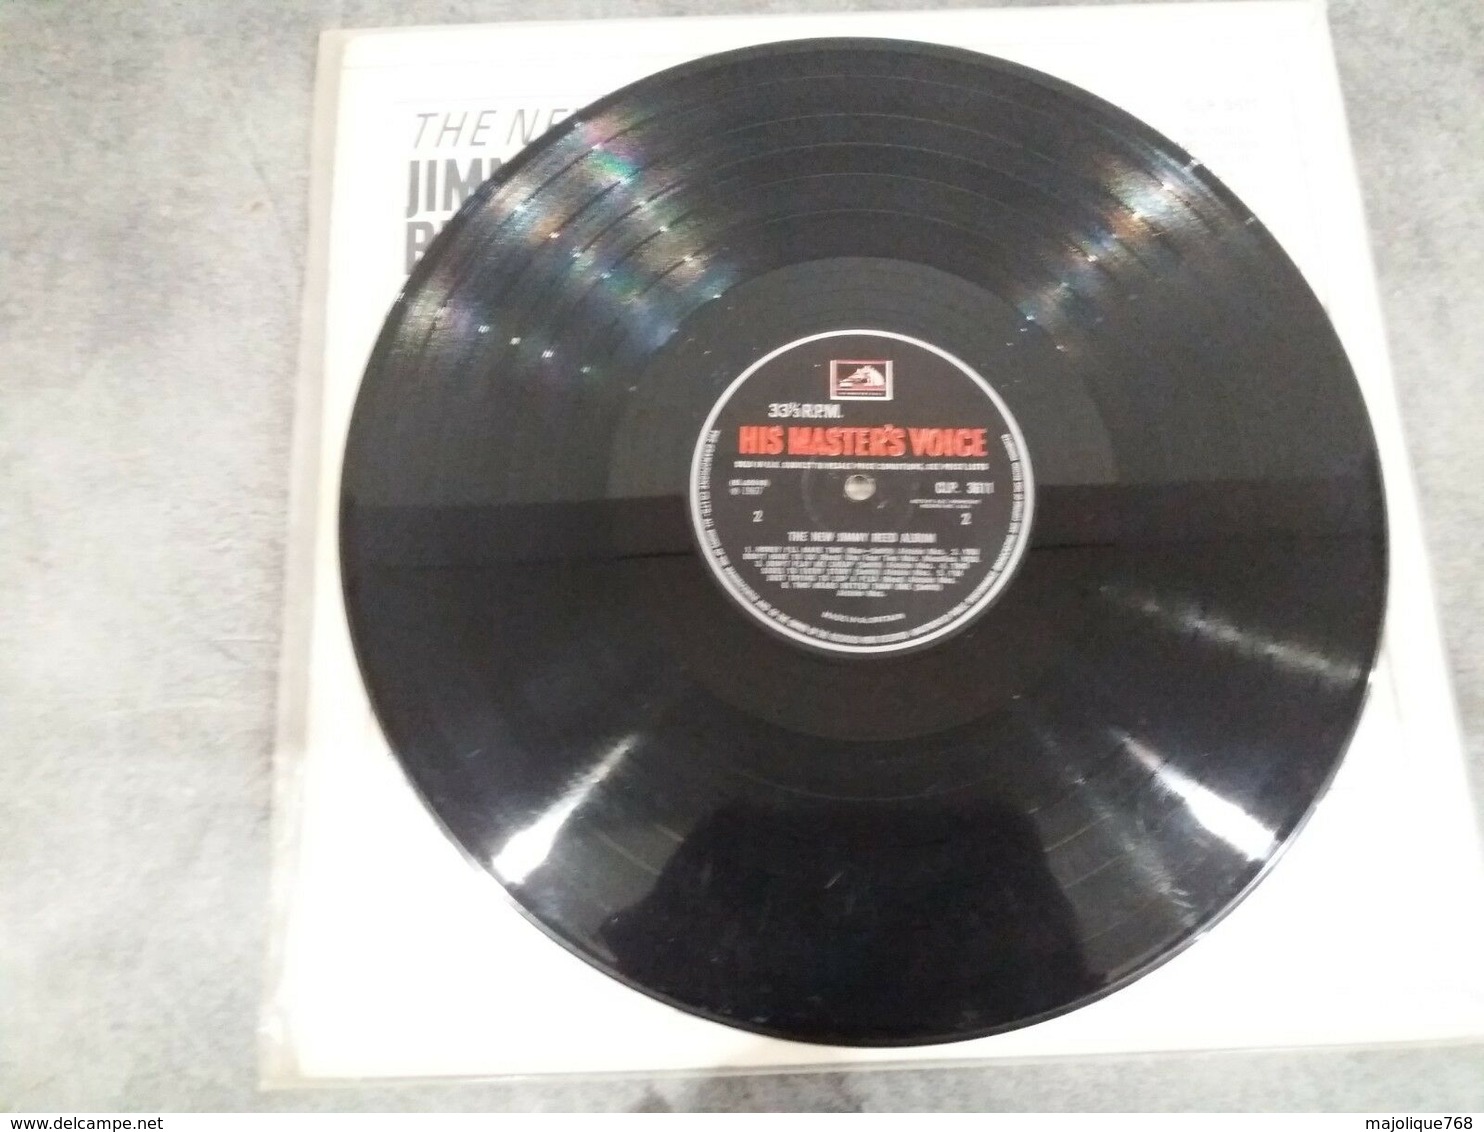 The New Jimmy Reed Album - Bluesway Mono CLP 3611 - 1967  Vinyl LP  Original UK - Blues